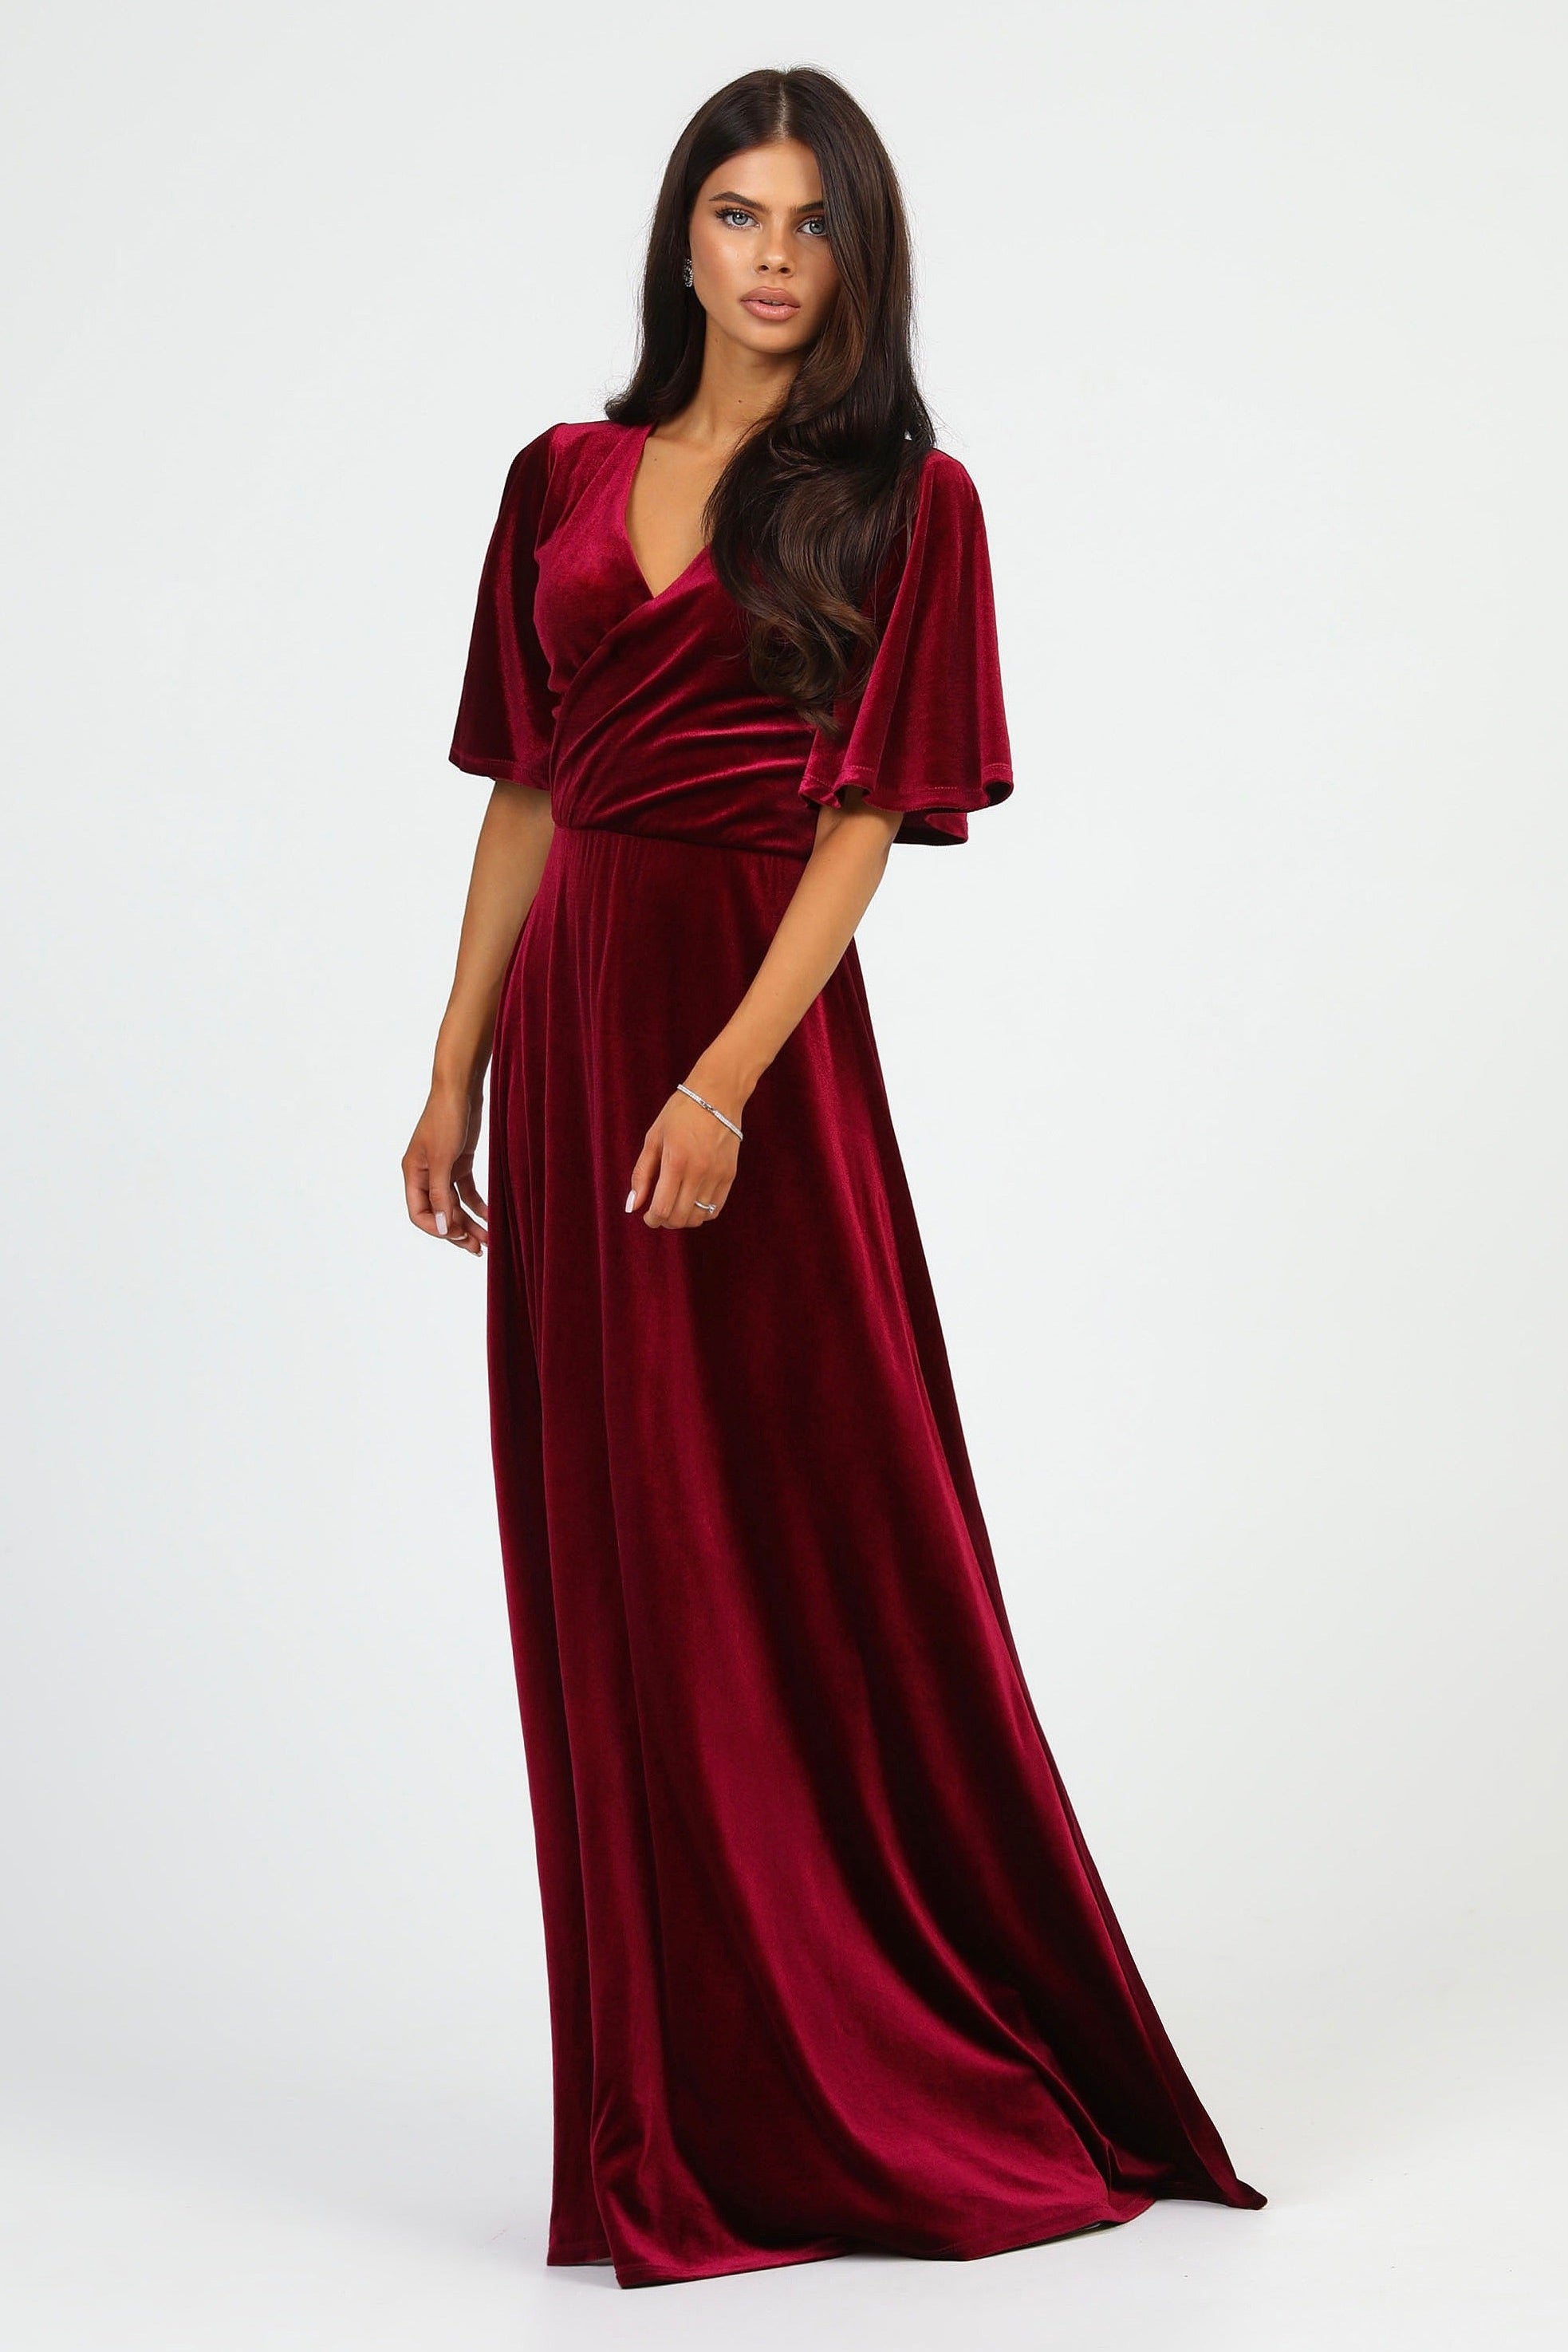 Buy Red Velvet Dress Online at Best Price | Mothercare India